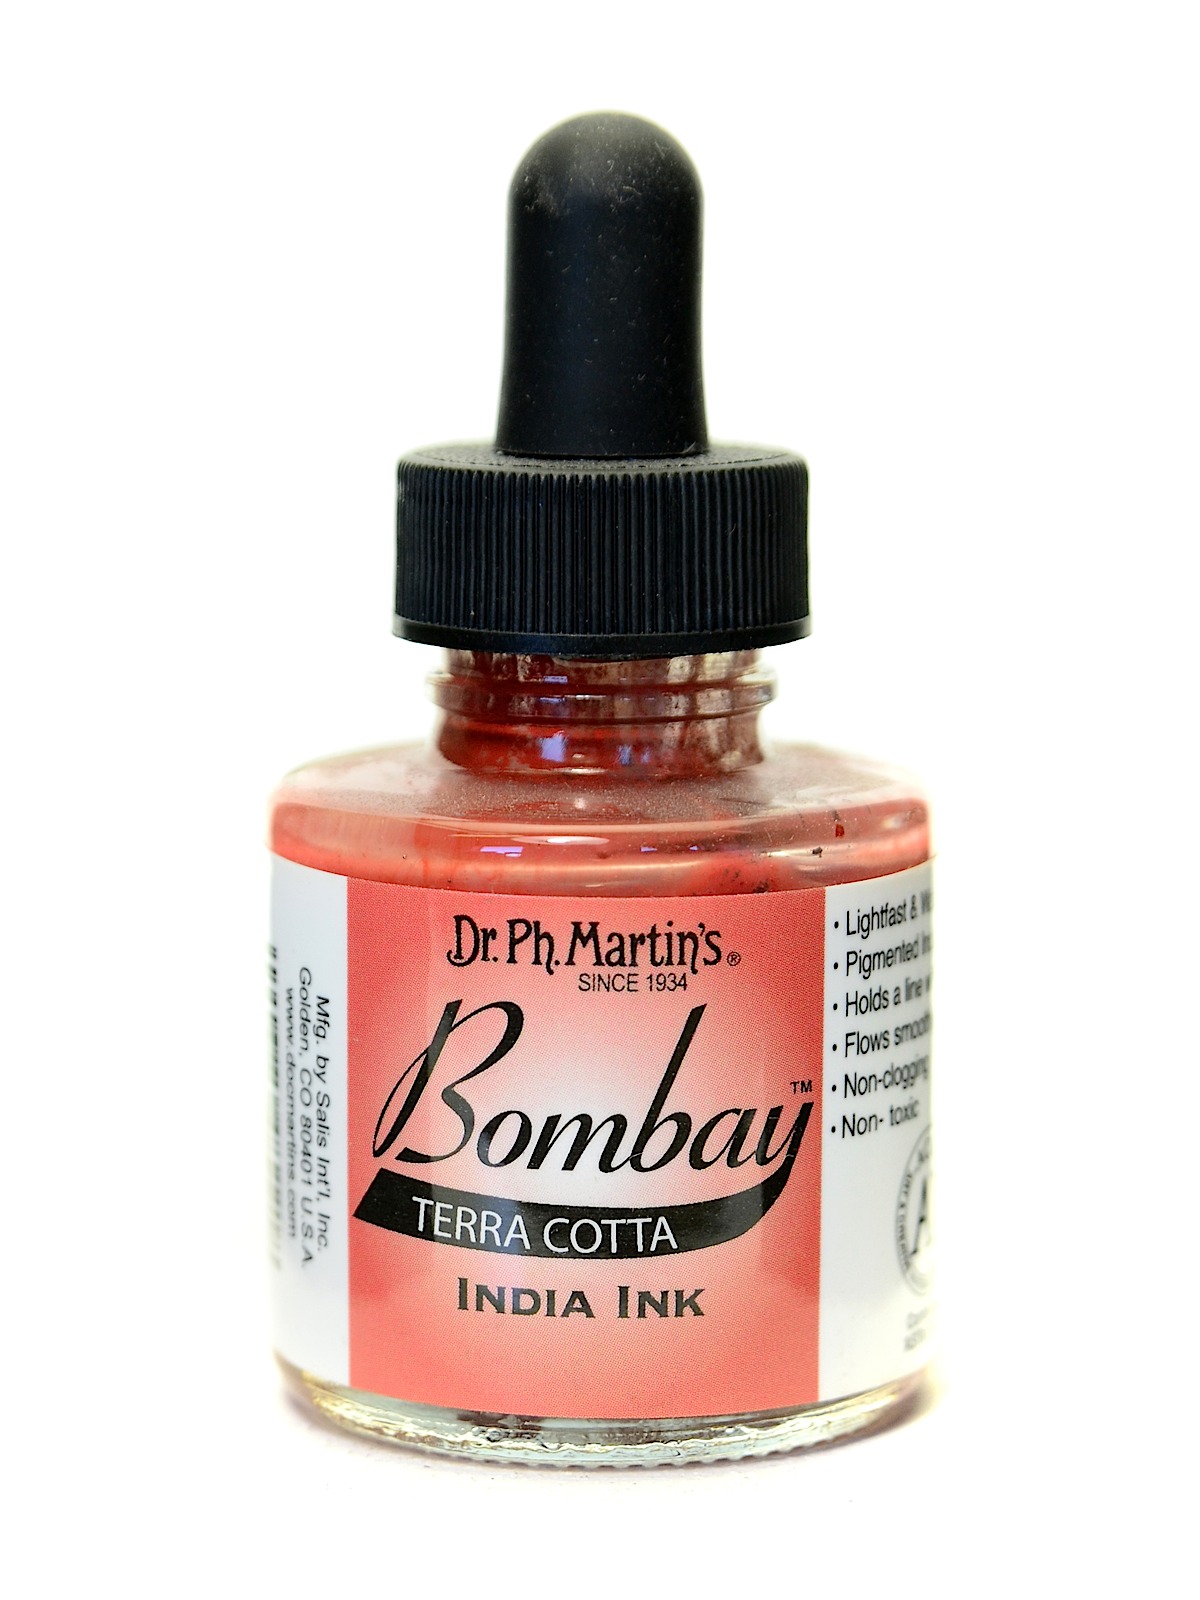 Bombay India Ink 1 Oz. Terra Cotta